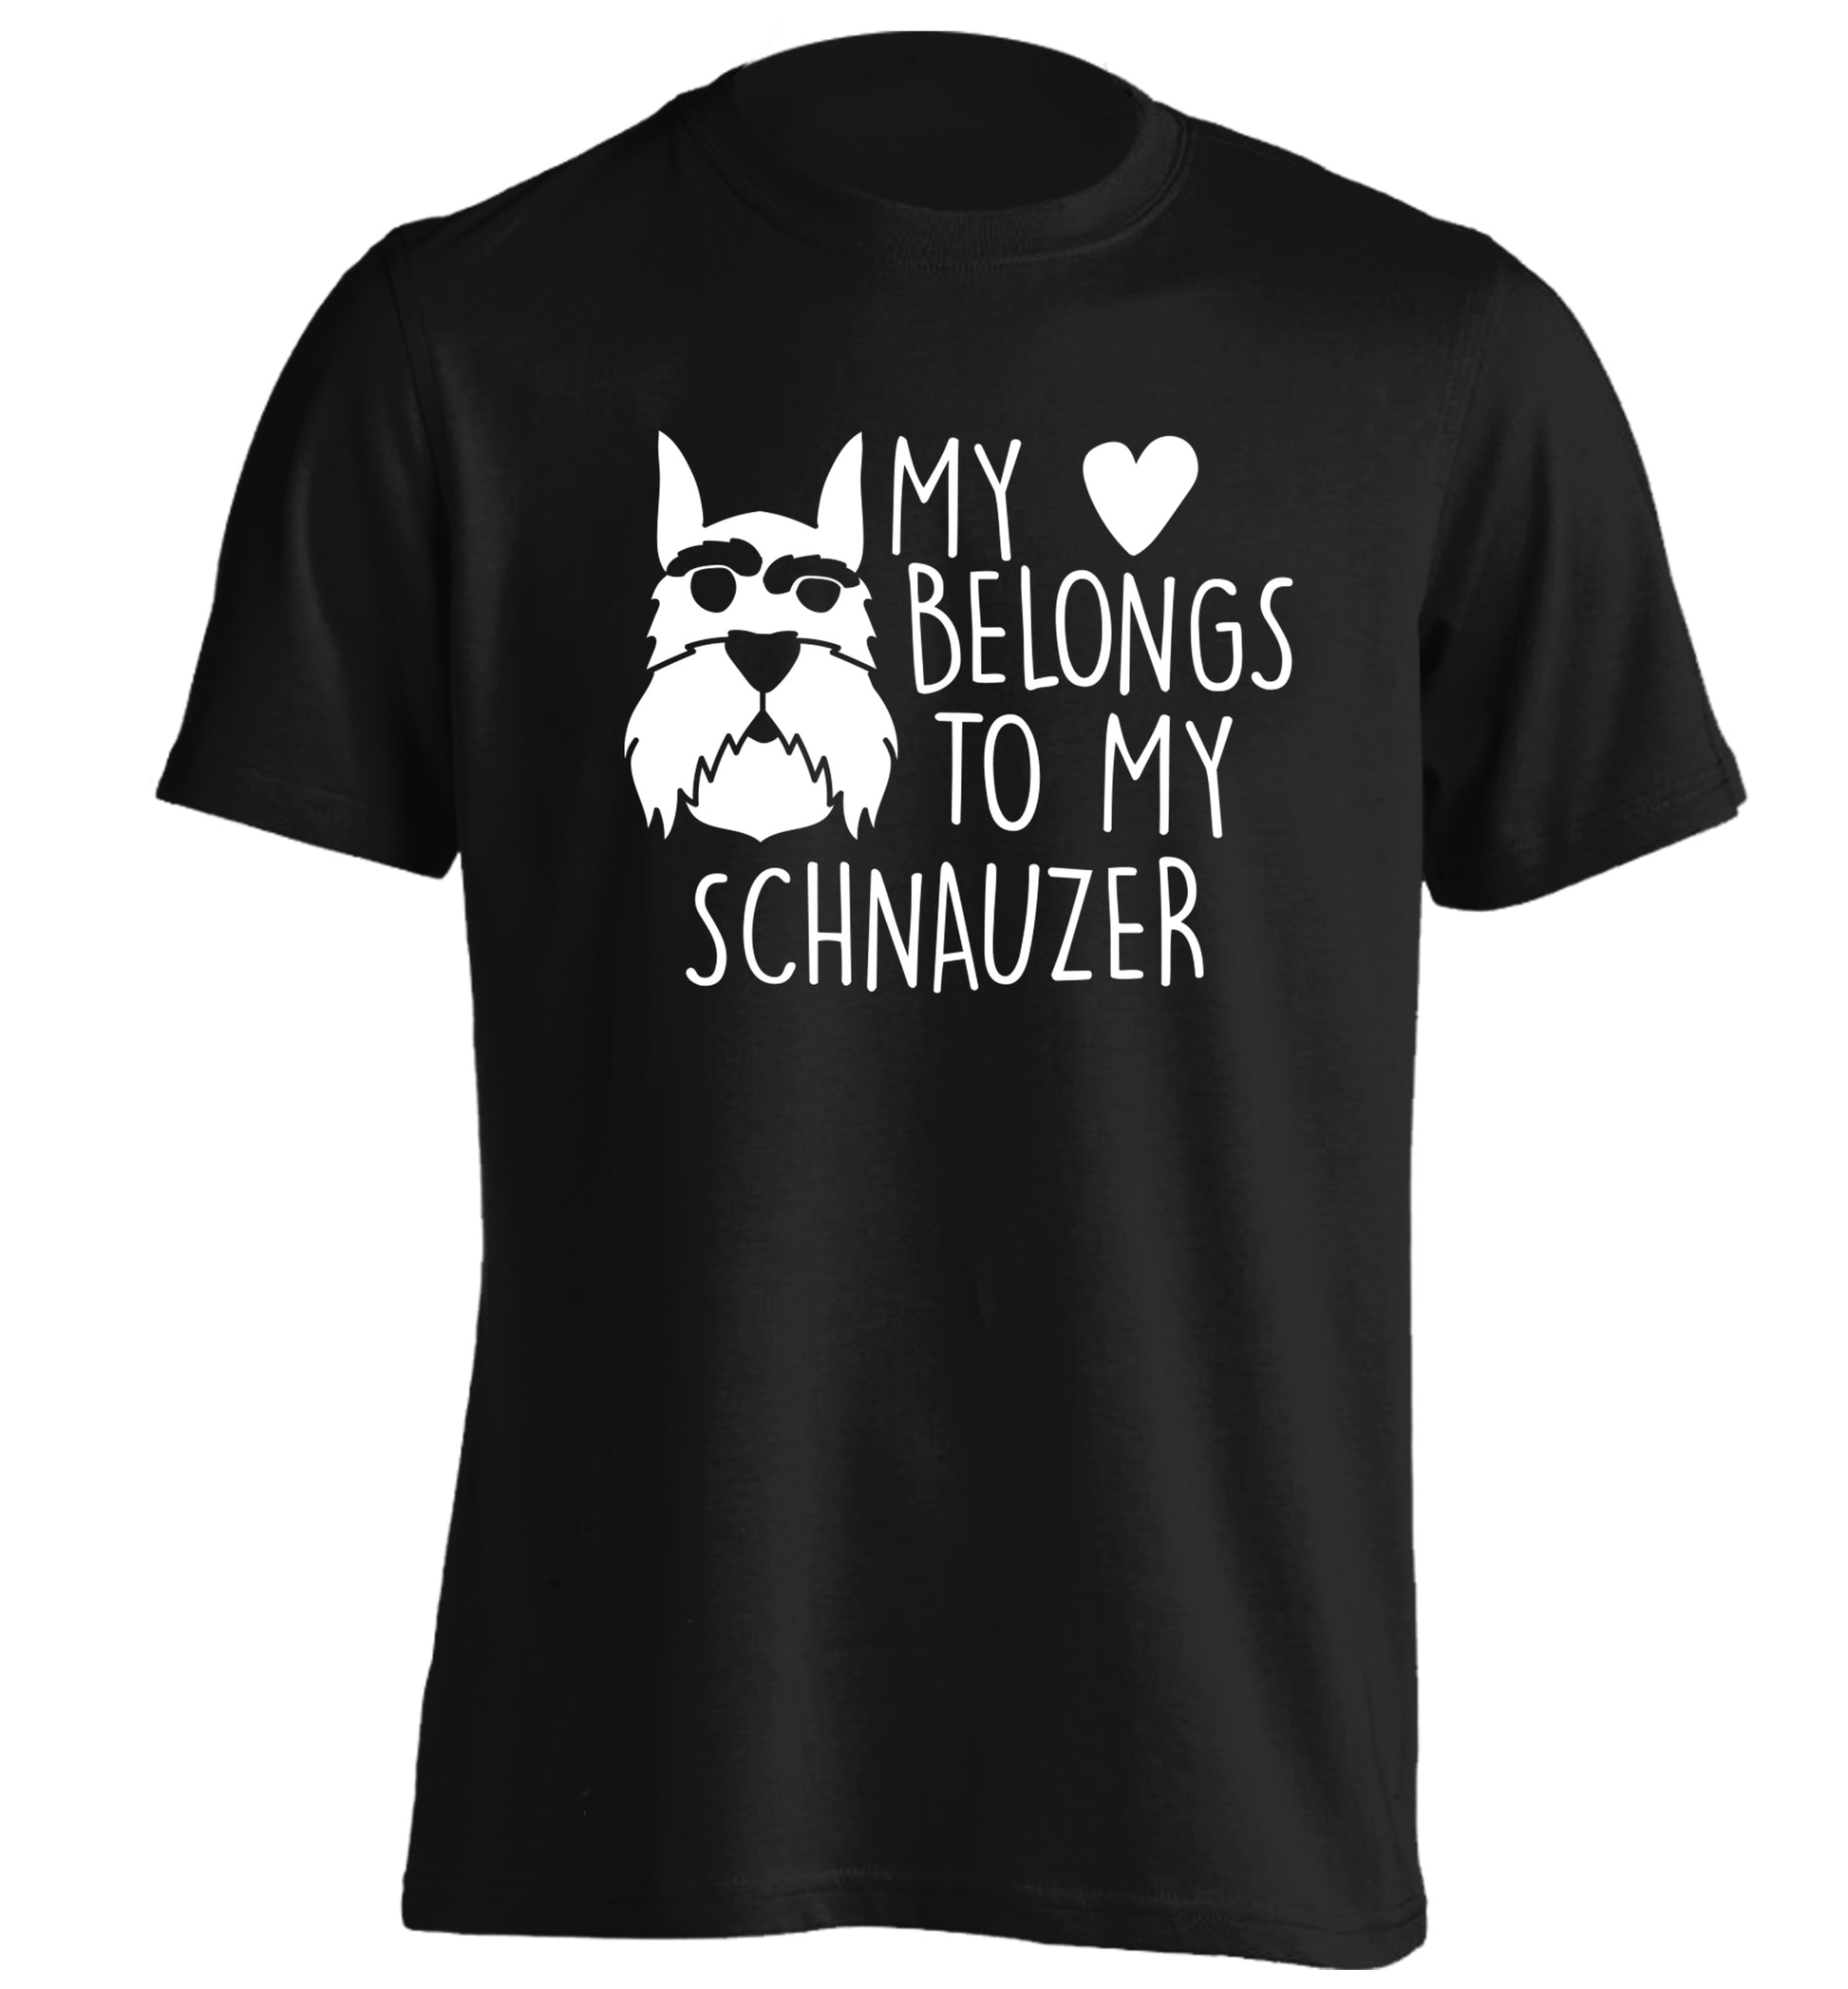 My heart belongs to my schnauzer adults unisex black Tshirt 2XL